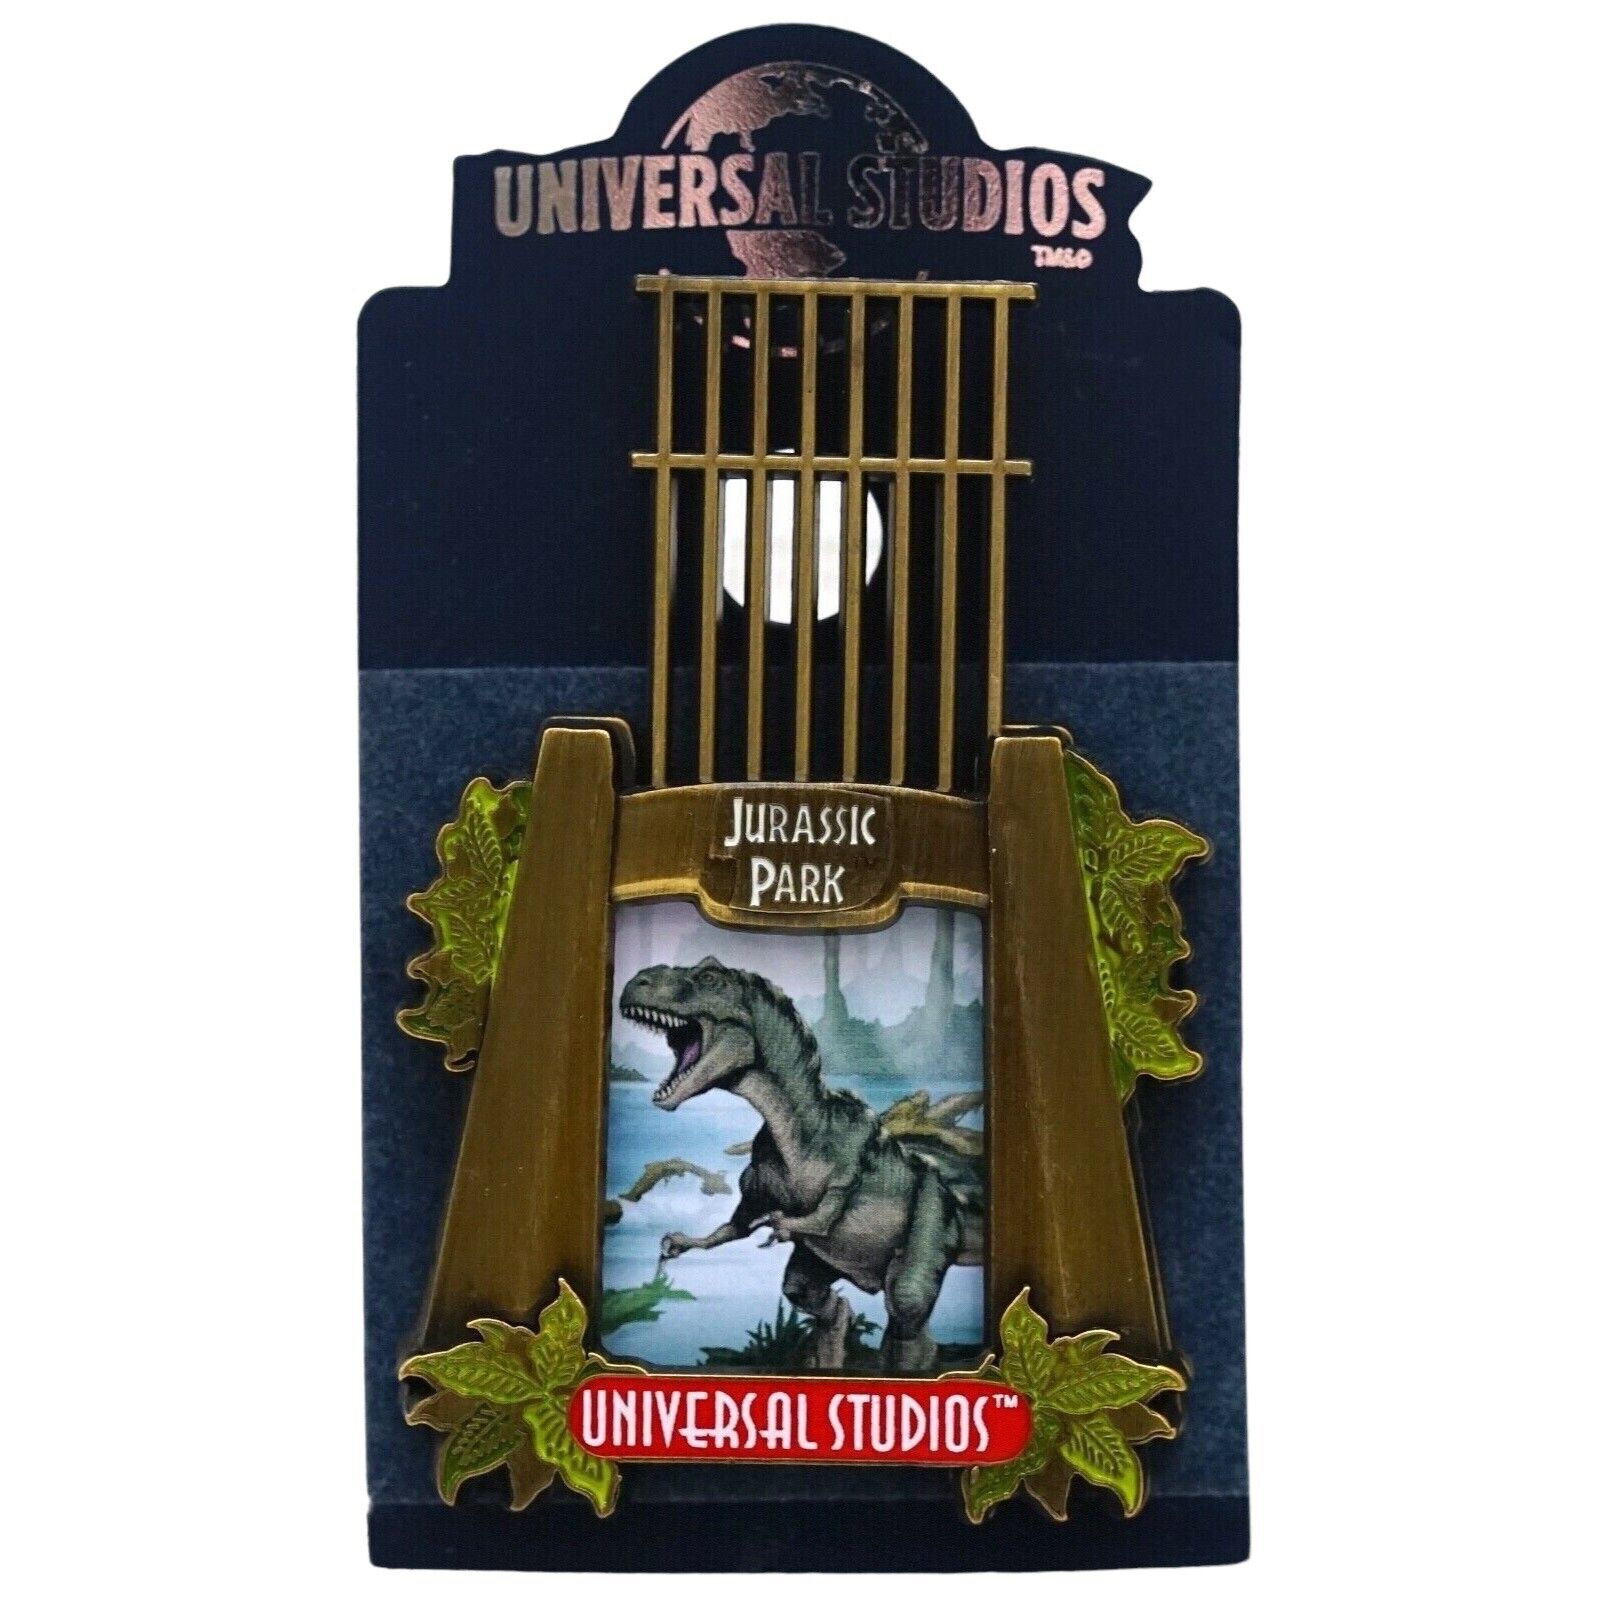 Universal Studios Jurassic Park T-Rex Gate Slider Pin